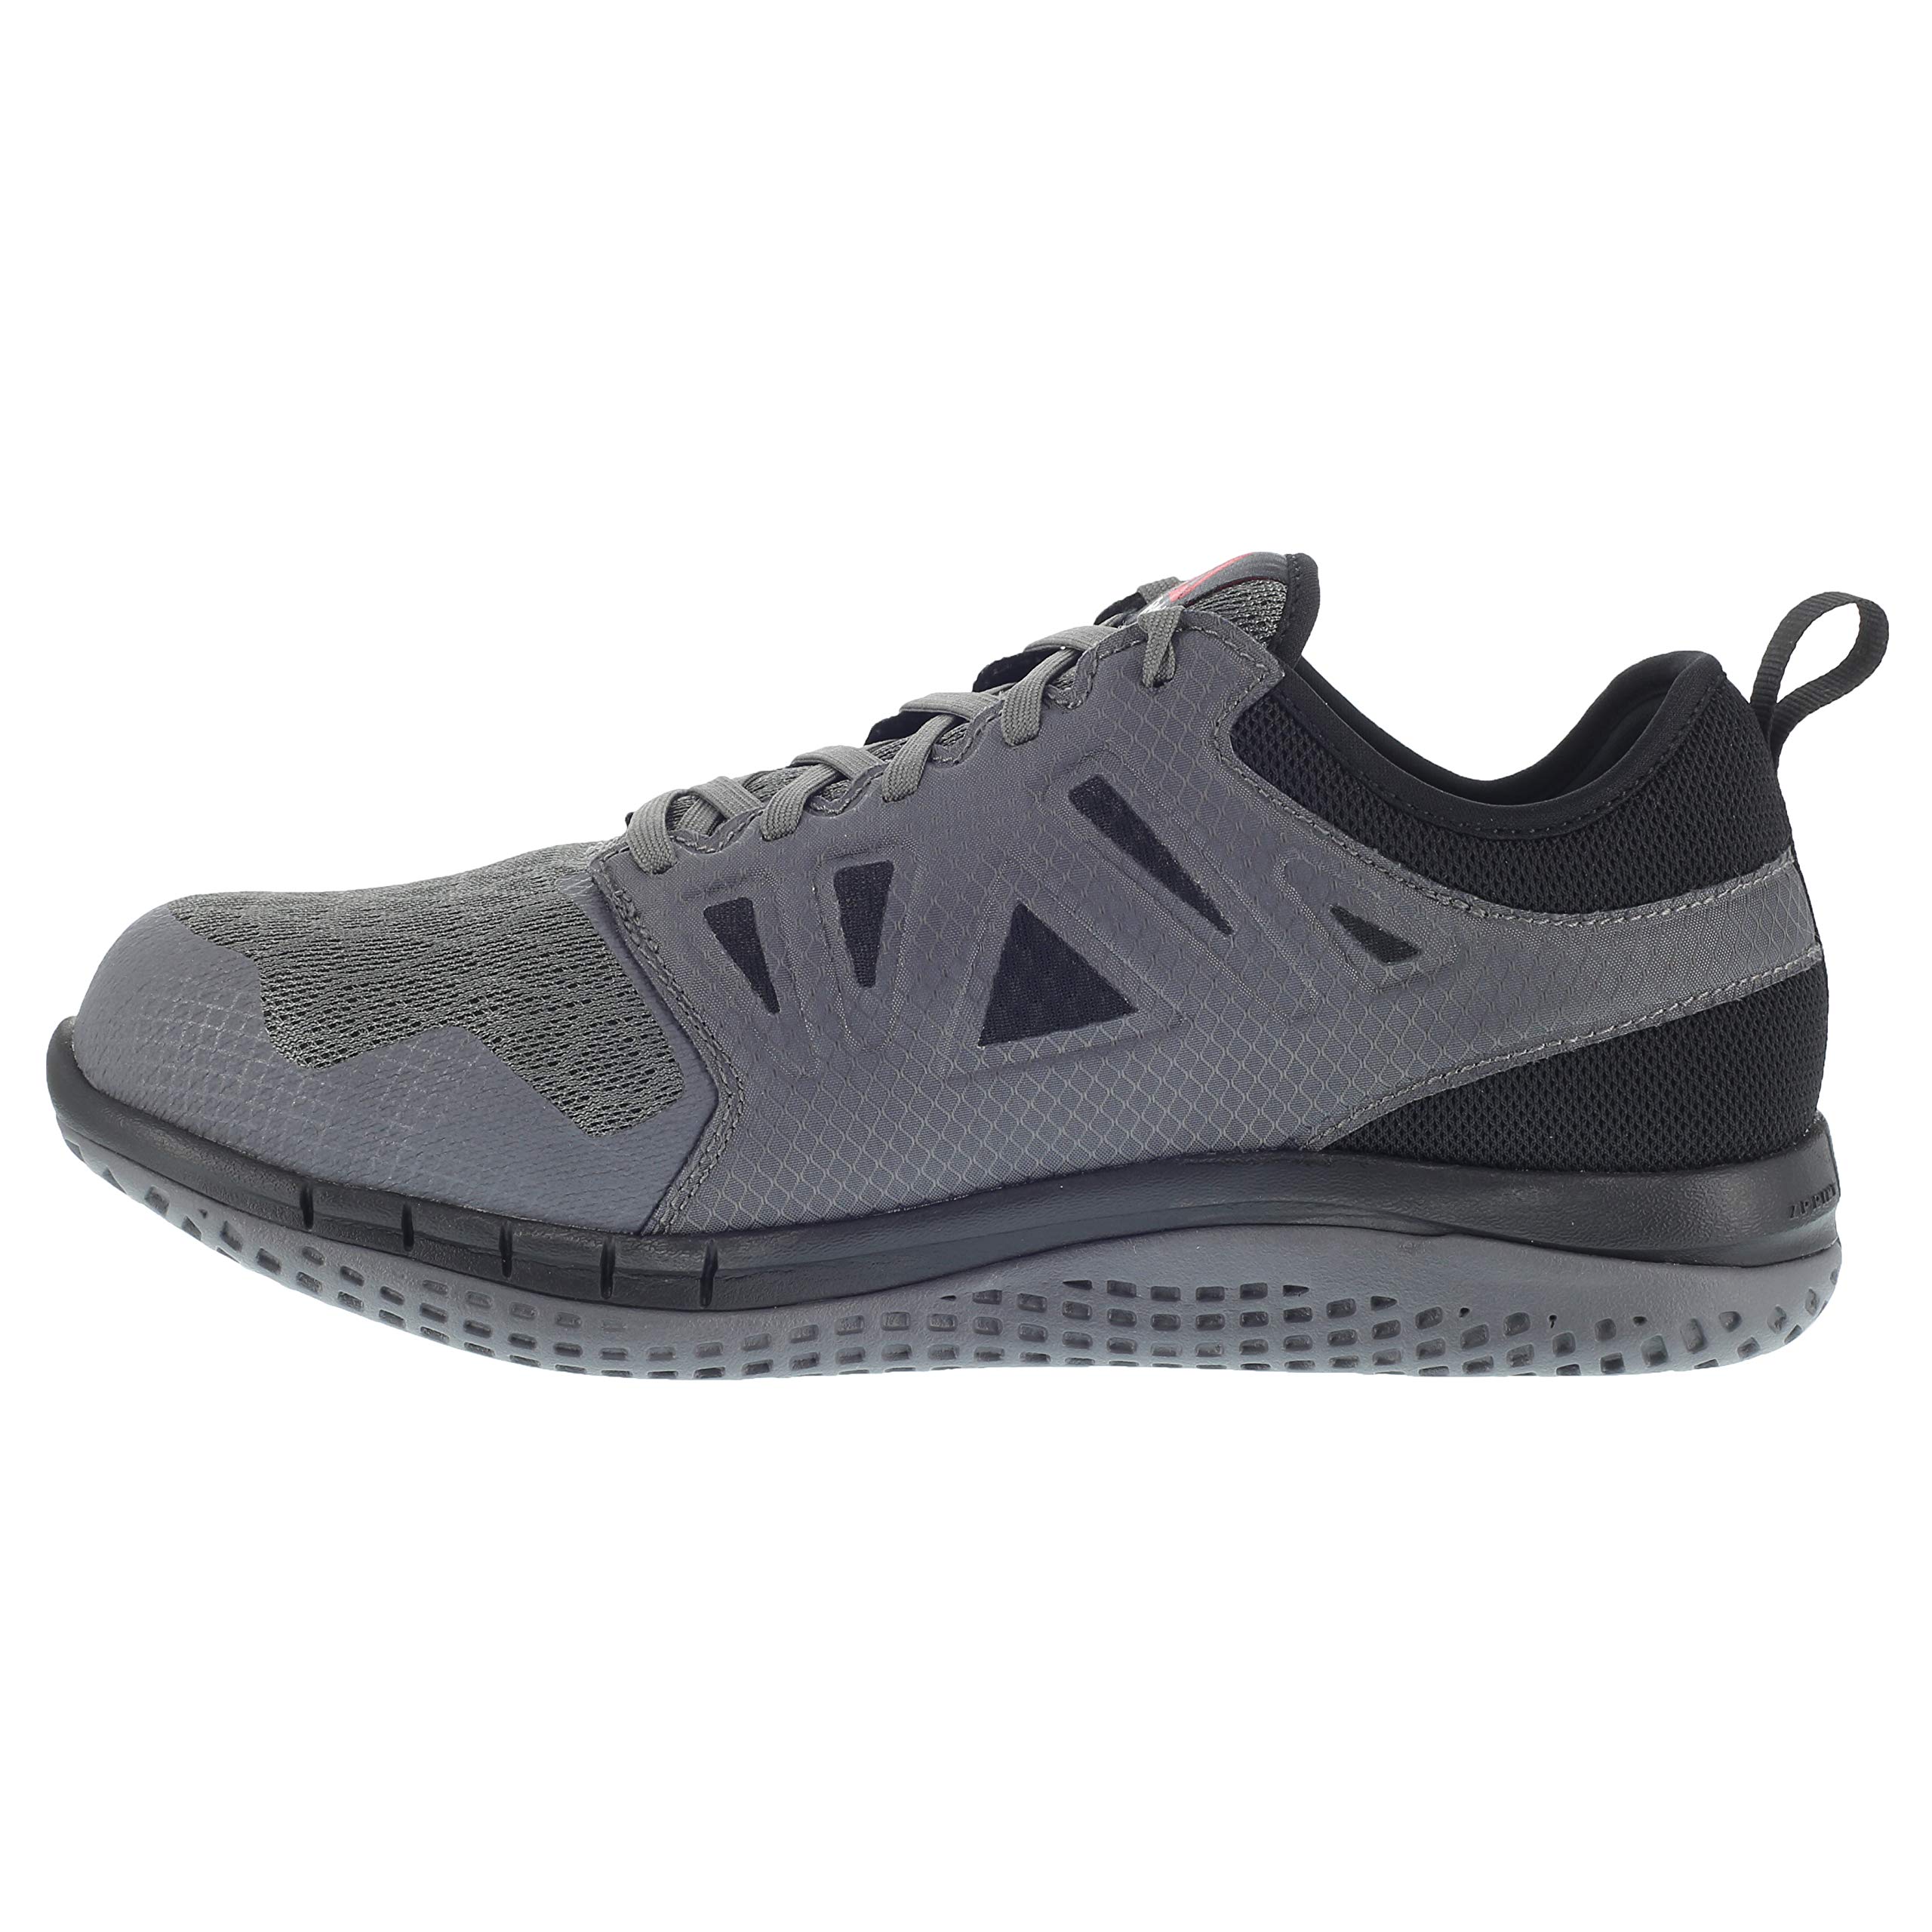 Reebok mens Zprint Work Safety Toe Athletic Work Industrial Construction Shoe, Dark Grey, 10 US